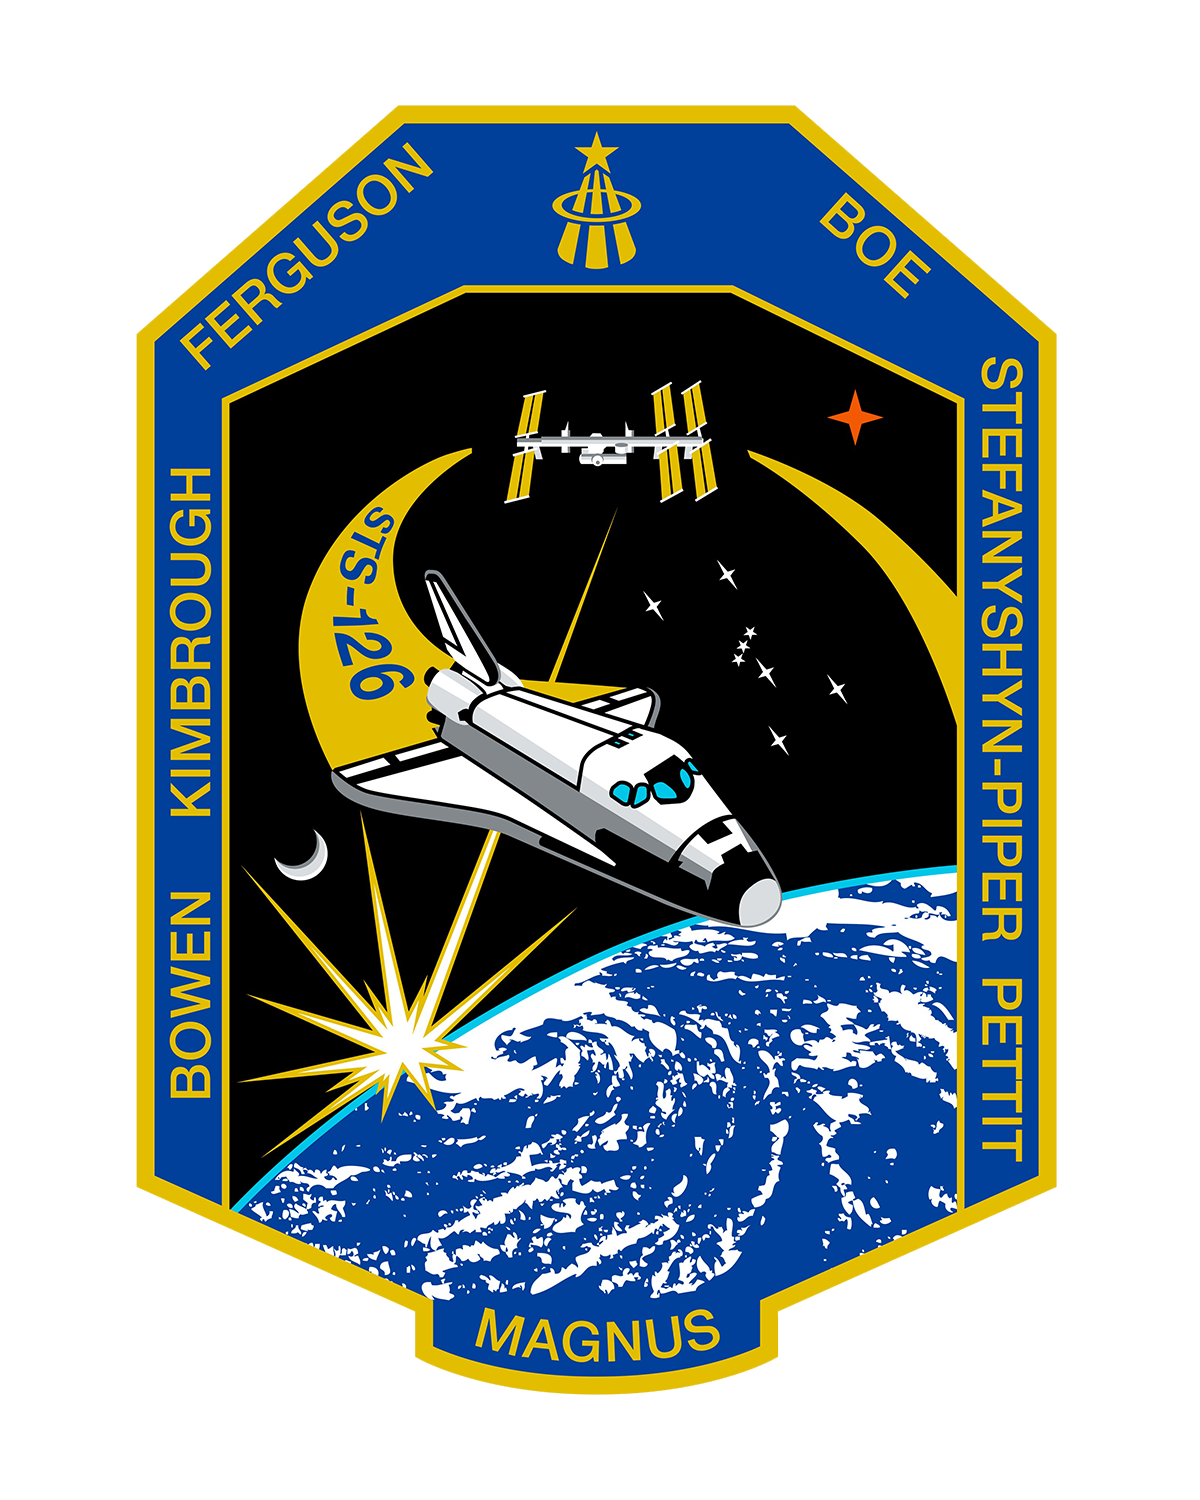 STS-126 (Endeavour)